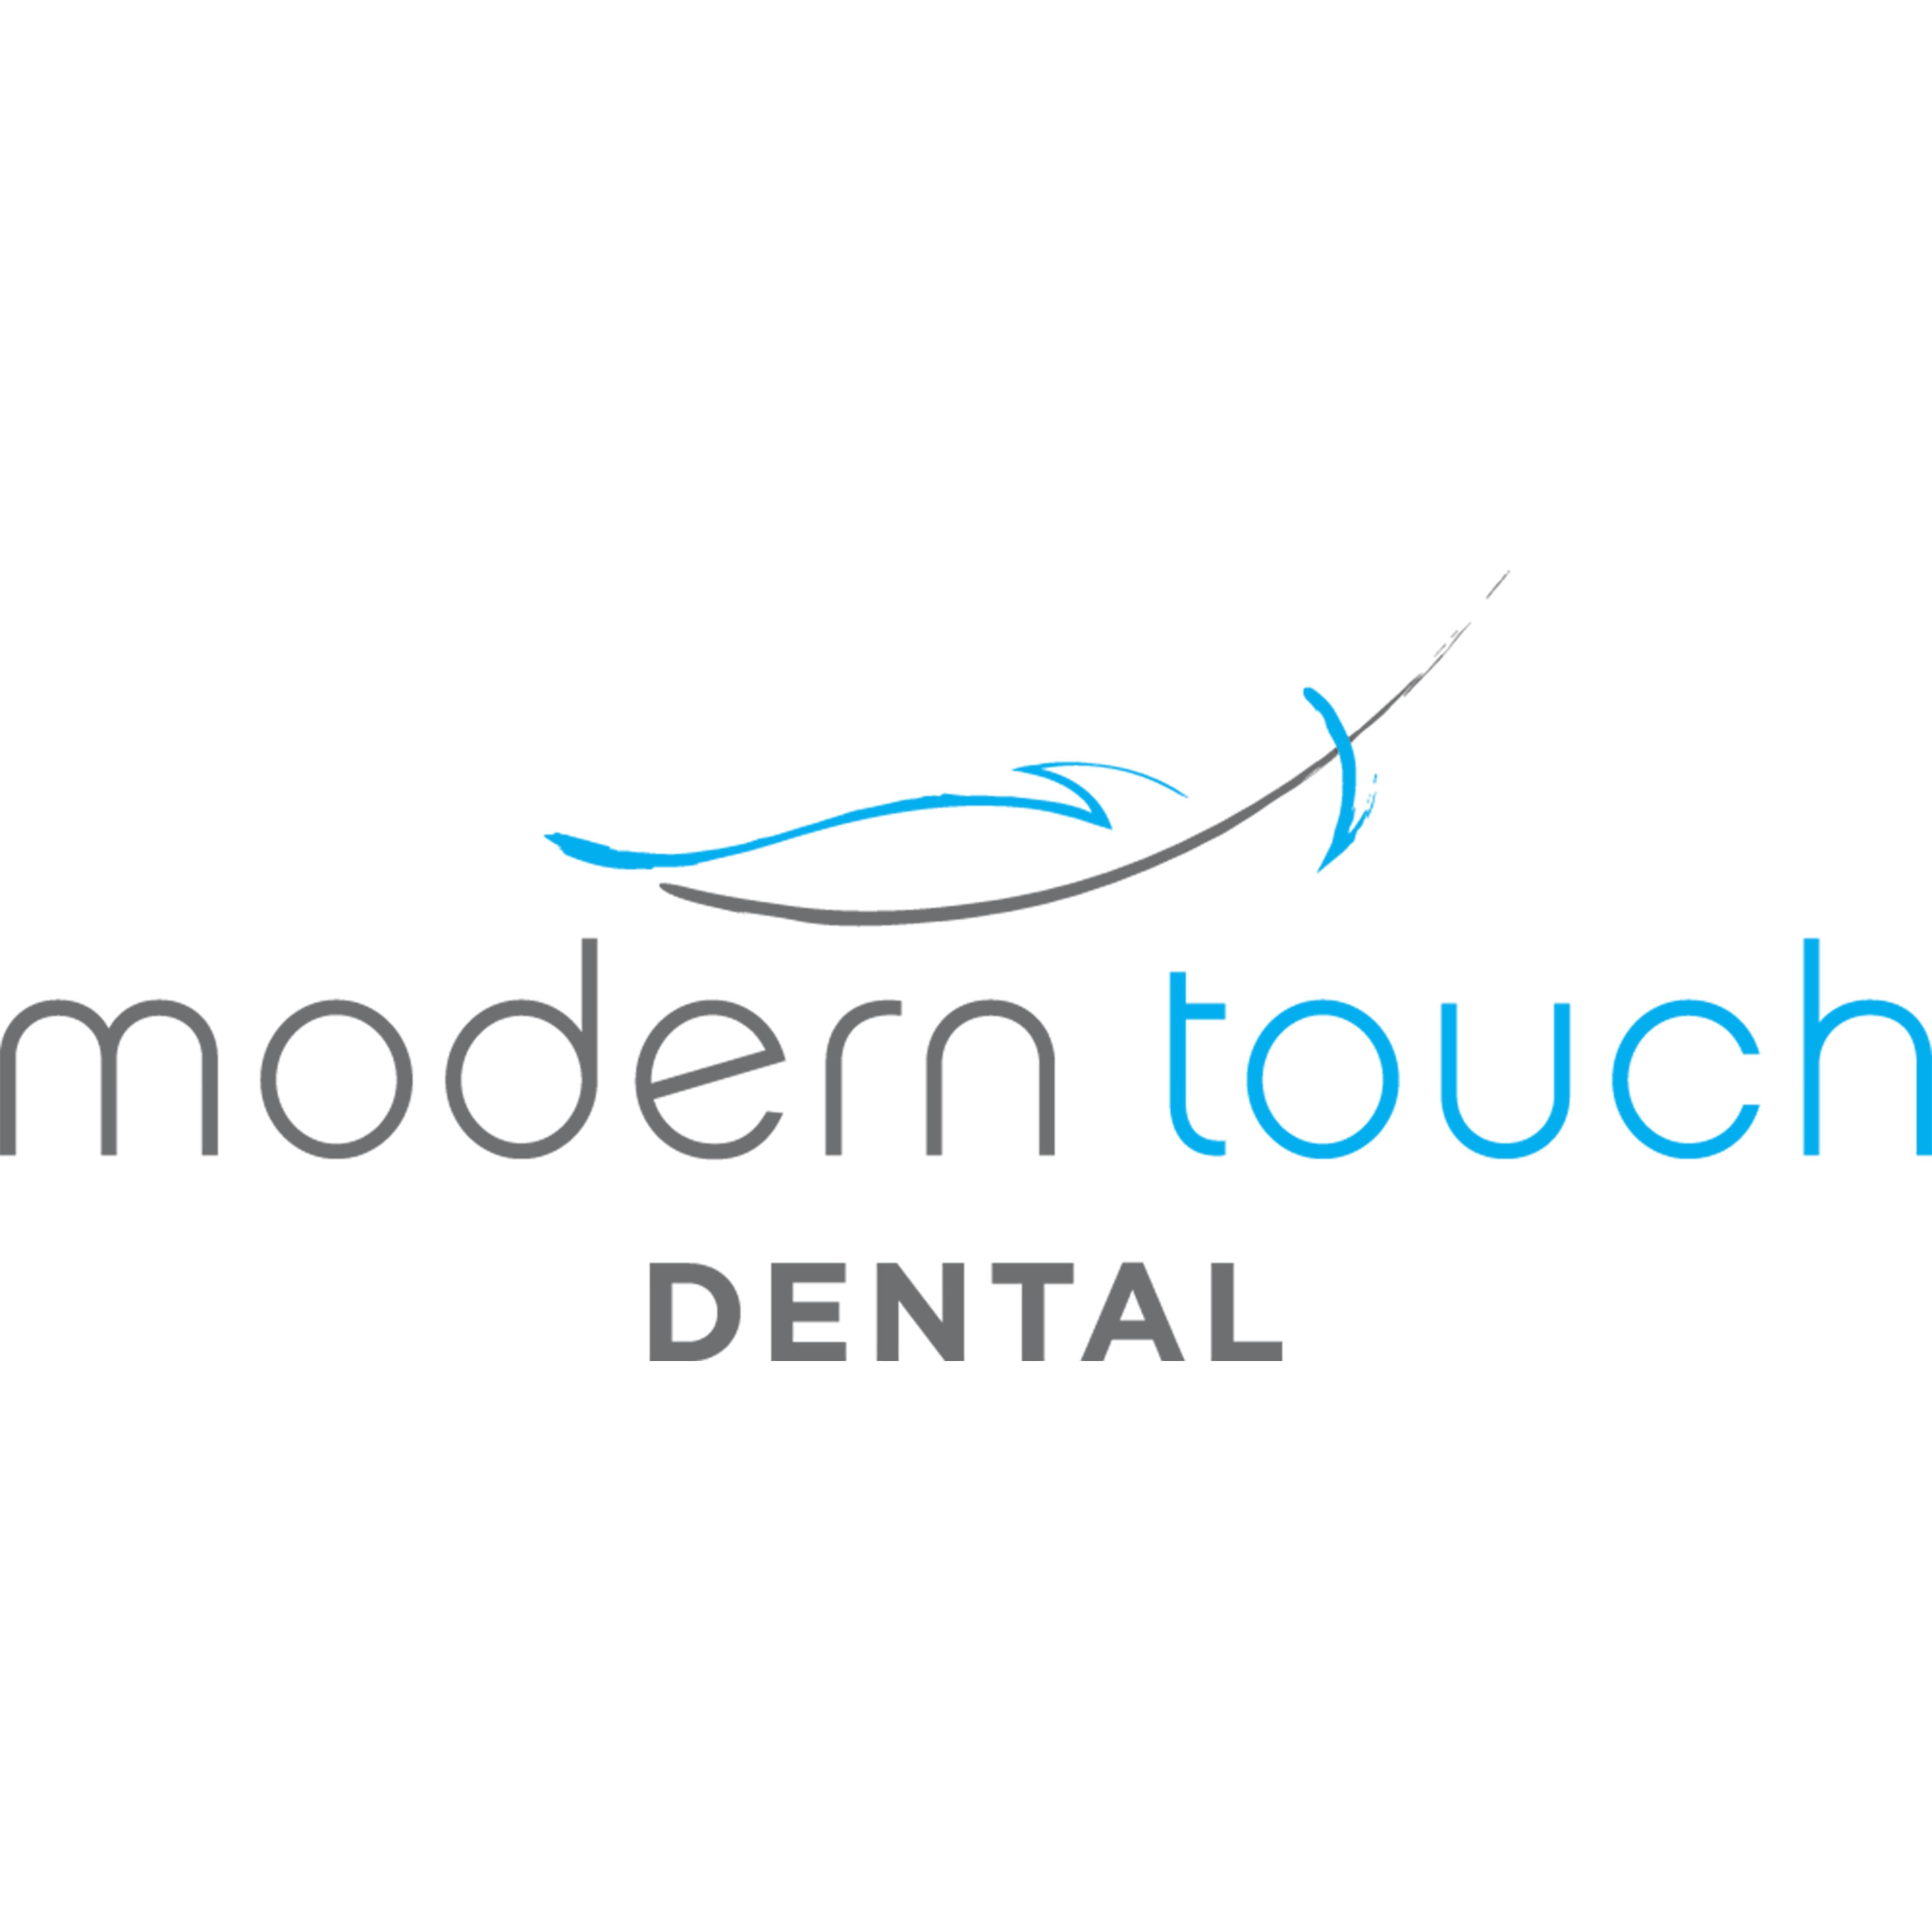 Modern Touch Dental-Glendale - Glendale, WI 53217 - (414)964-0680 | ShowMeLocal.com